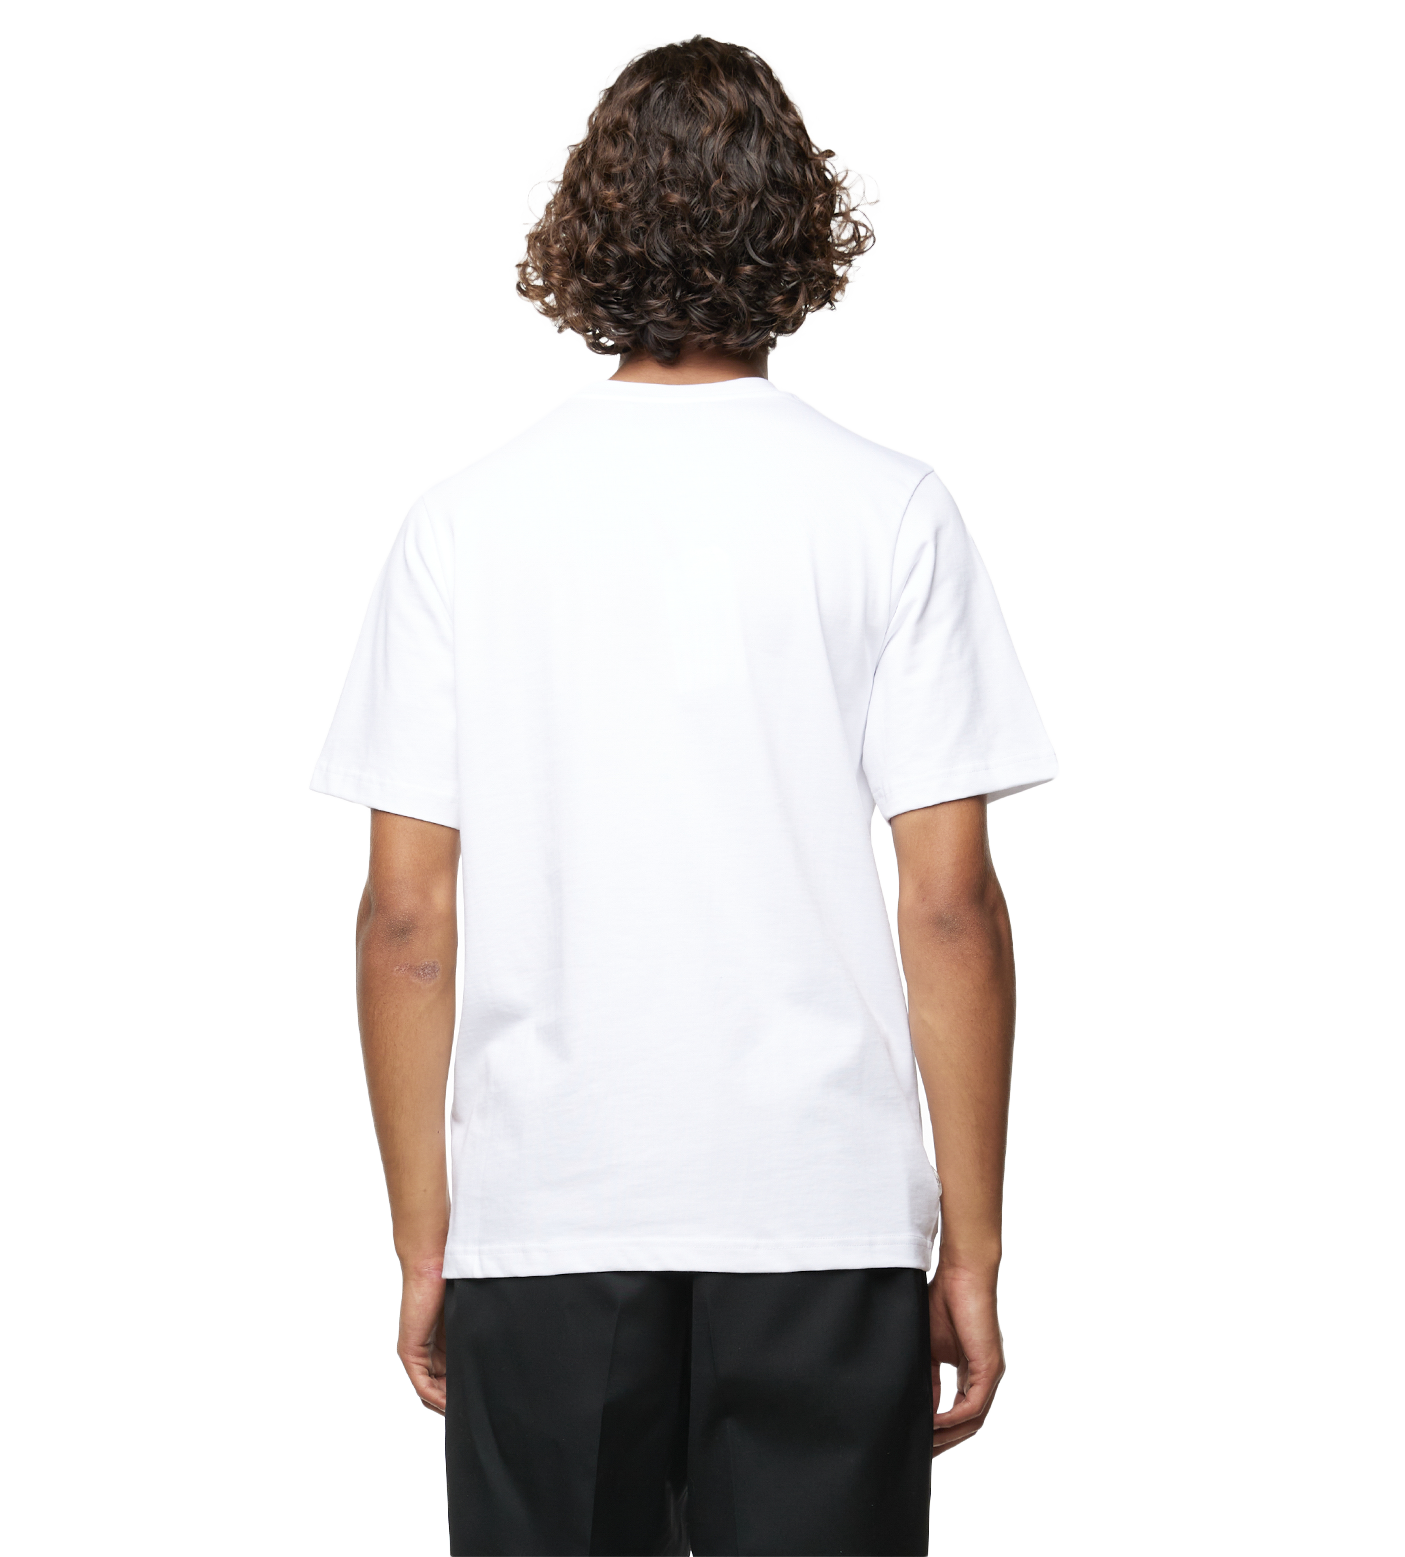 La Joueuse T-shirt White